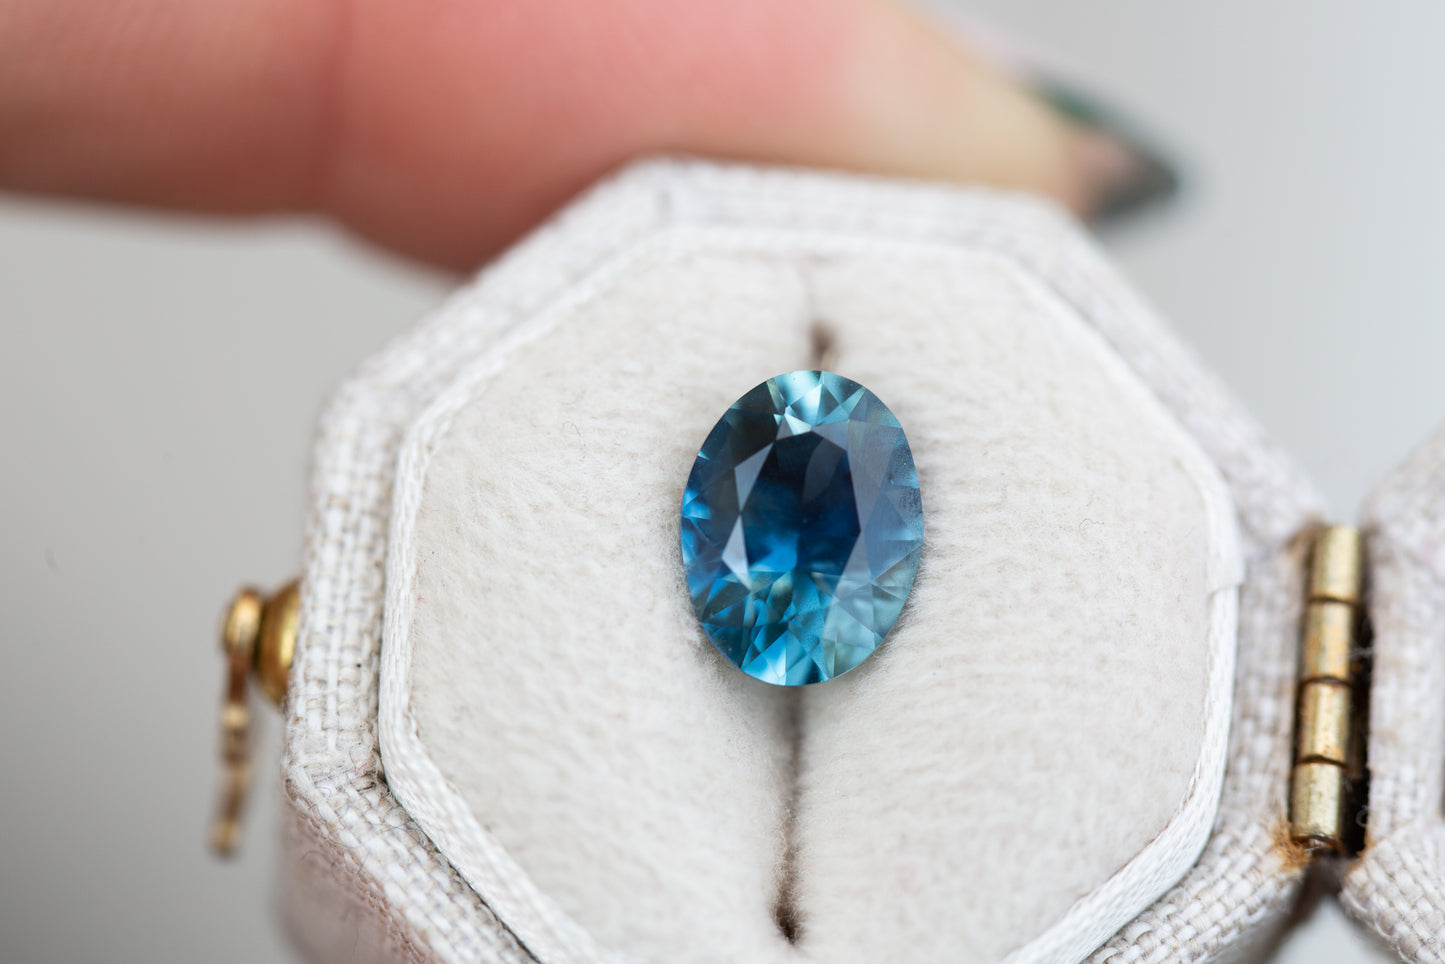 2.4ct oval deep blue teal sapphire